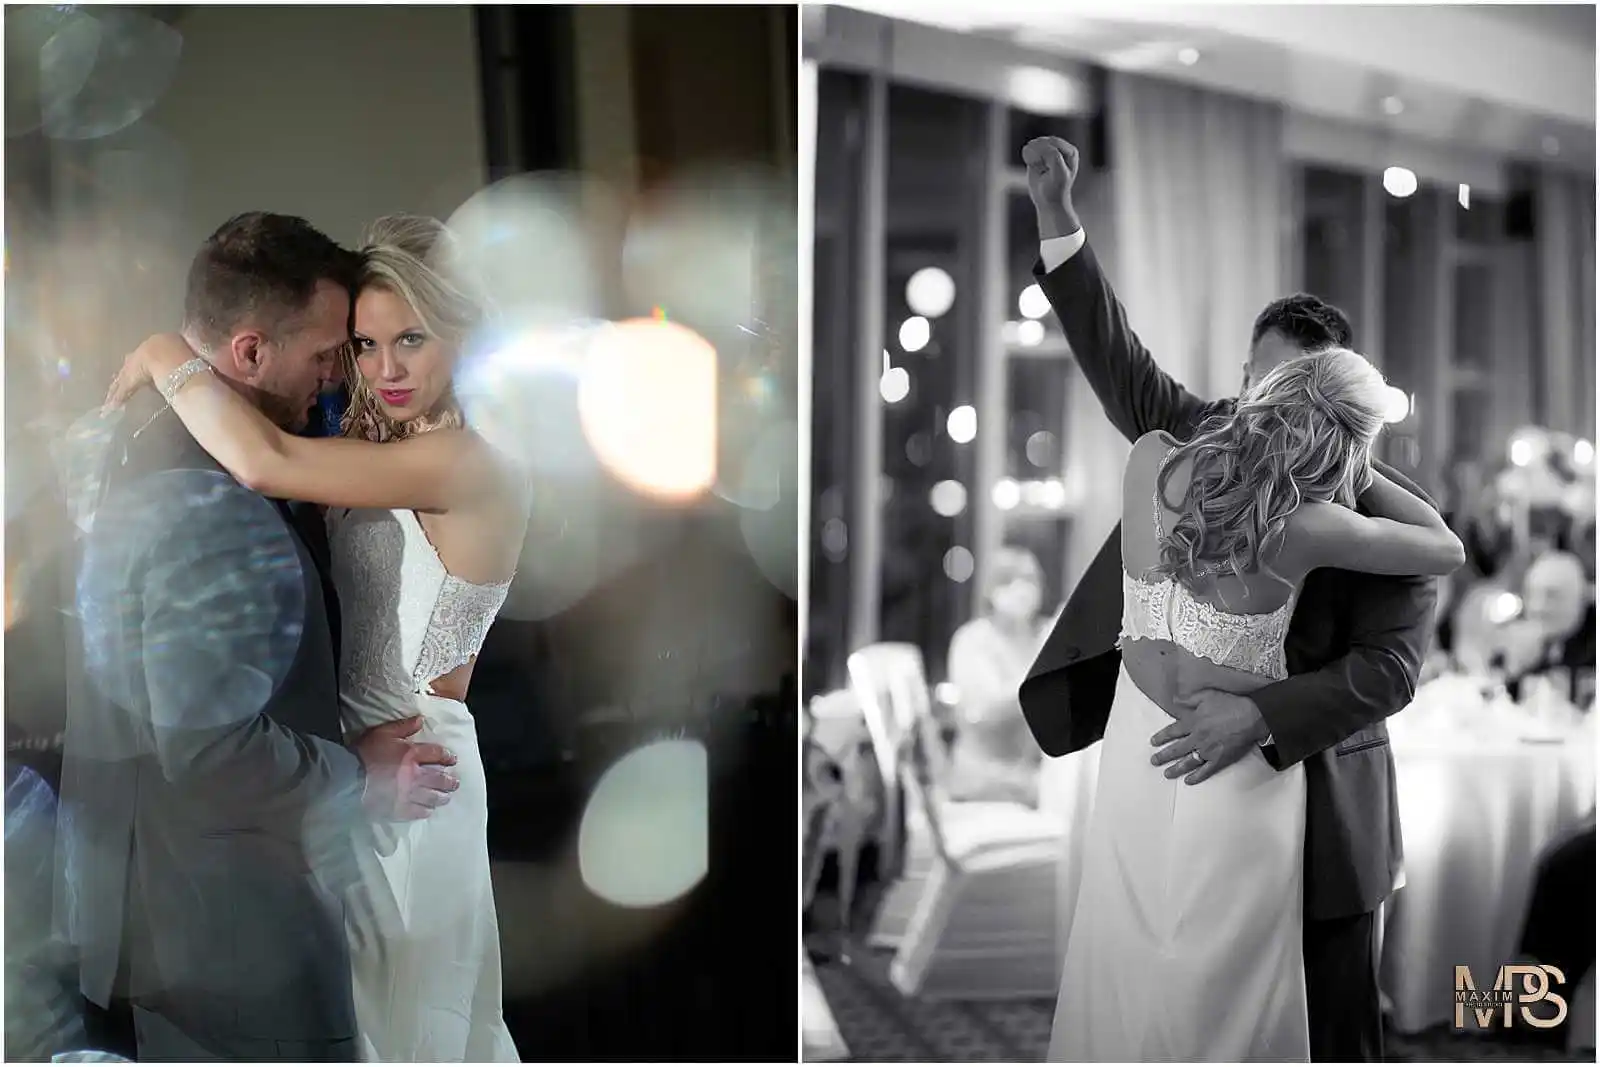 Romantic bride and groom embracing at wedding celebration at Marriott Rivercenter Covington KY wedding